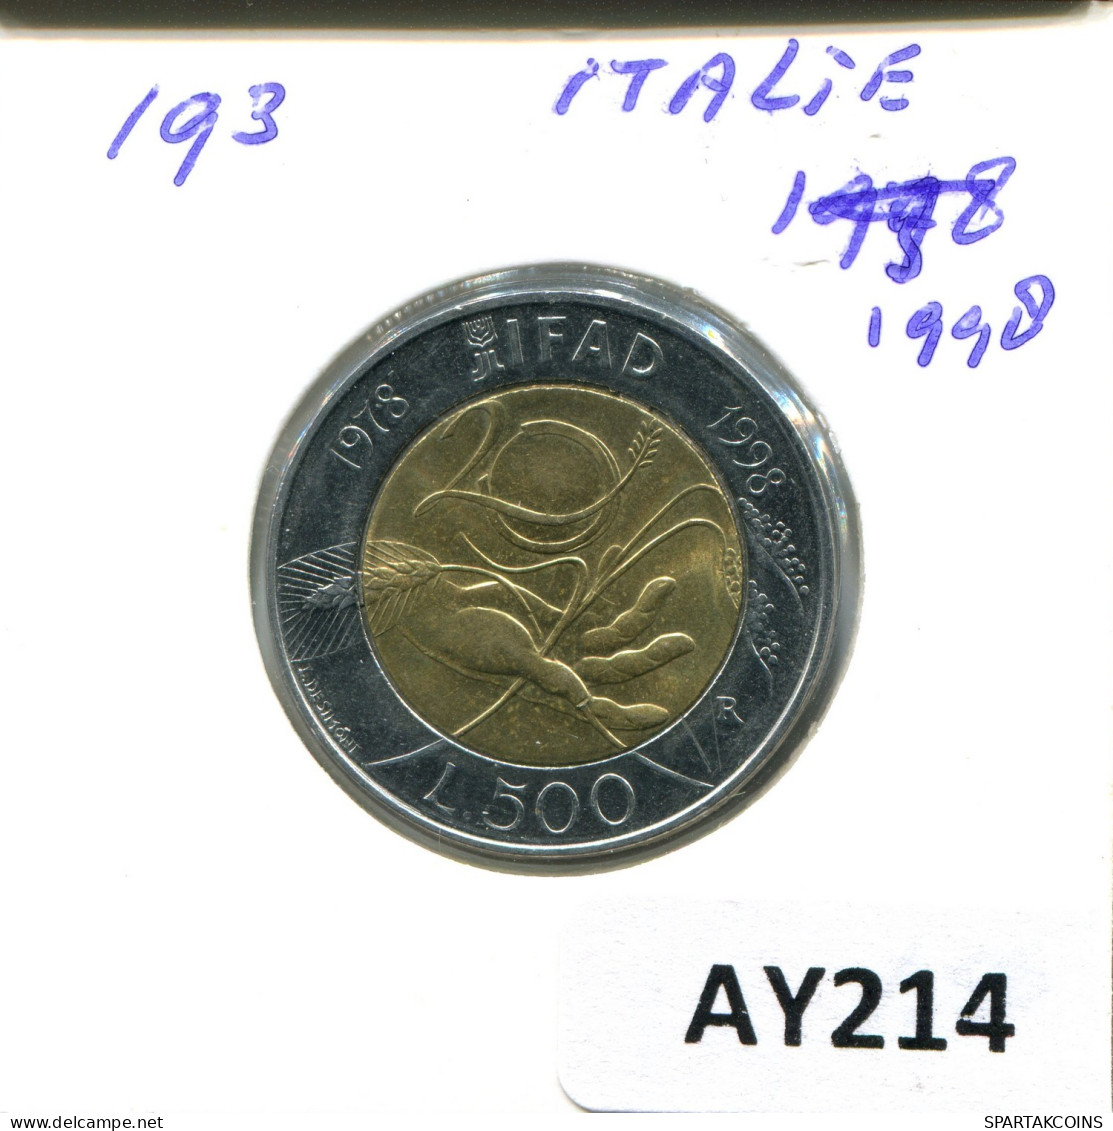 500 LIRE 1998 ITALY Coin BIMETALLIC #AY214.2.U.A - 500 Liras